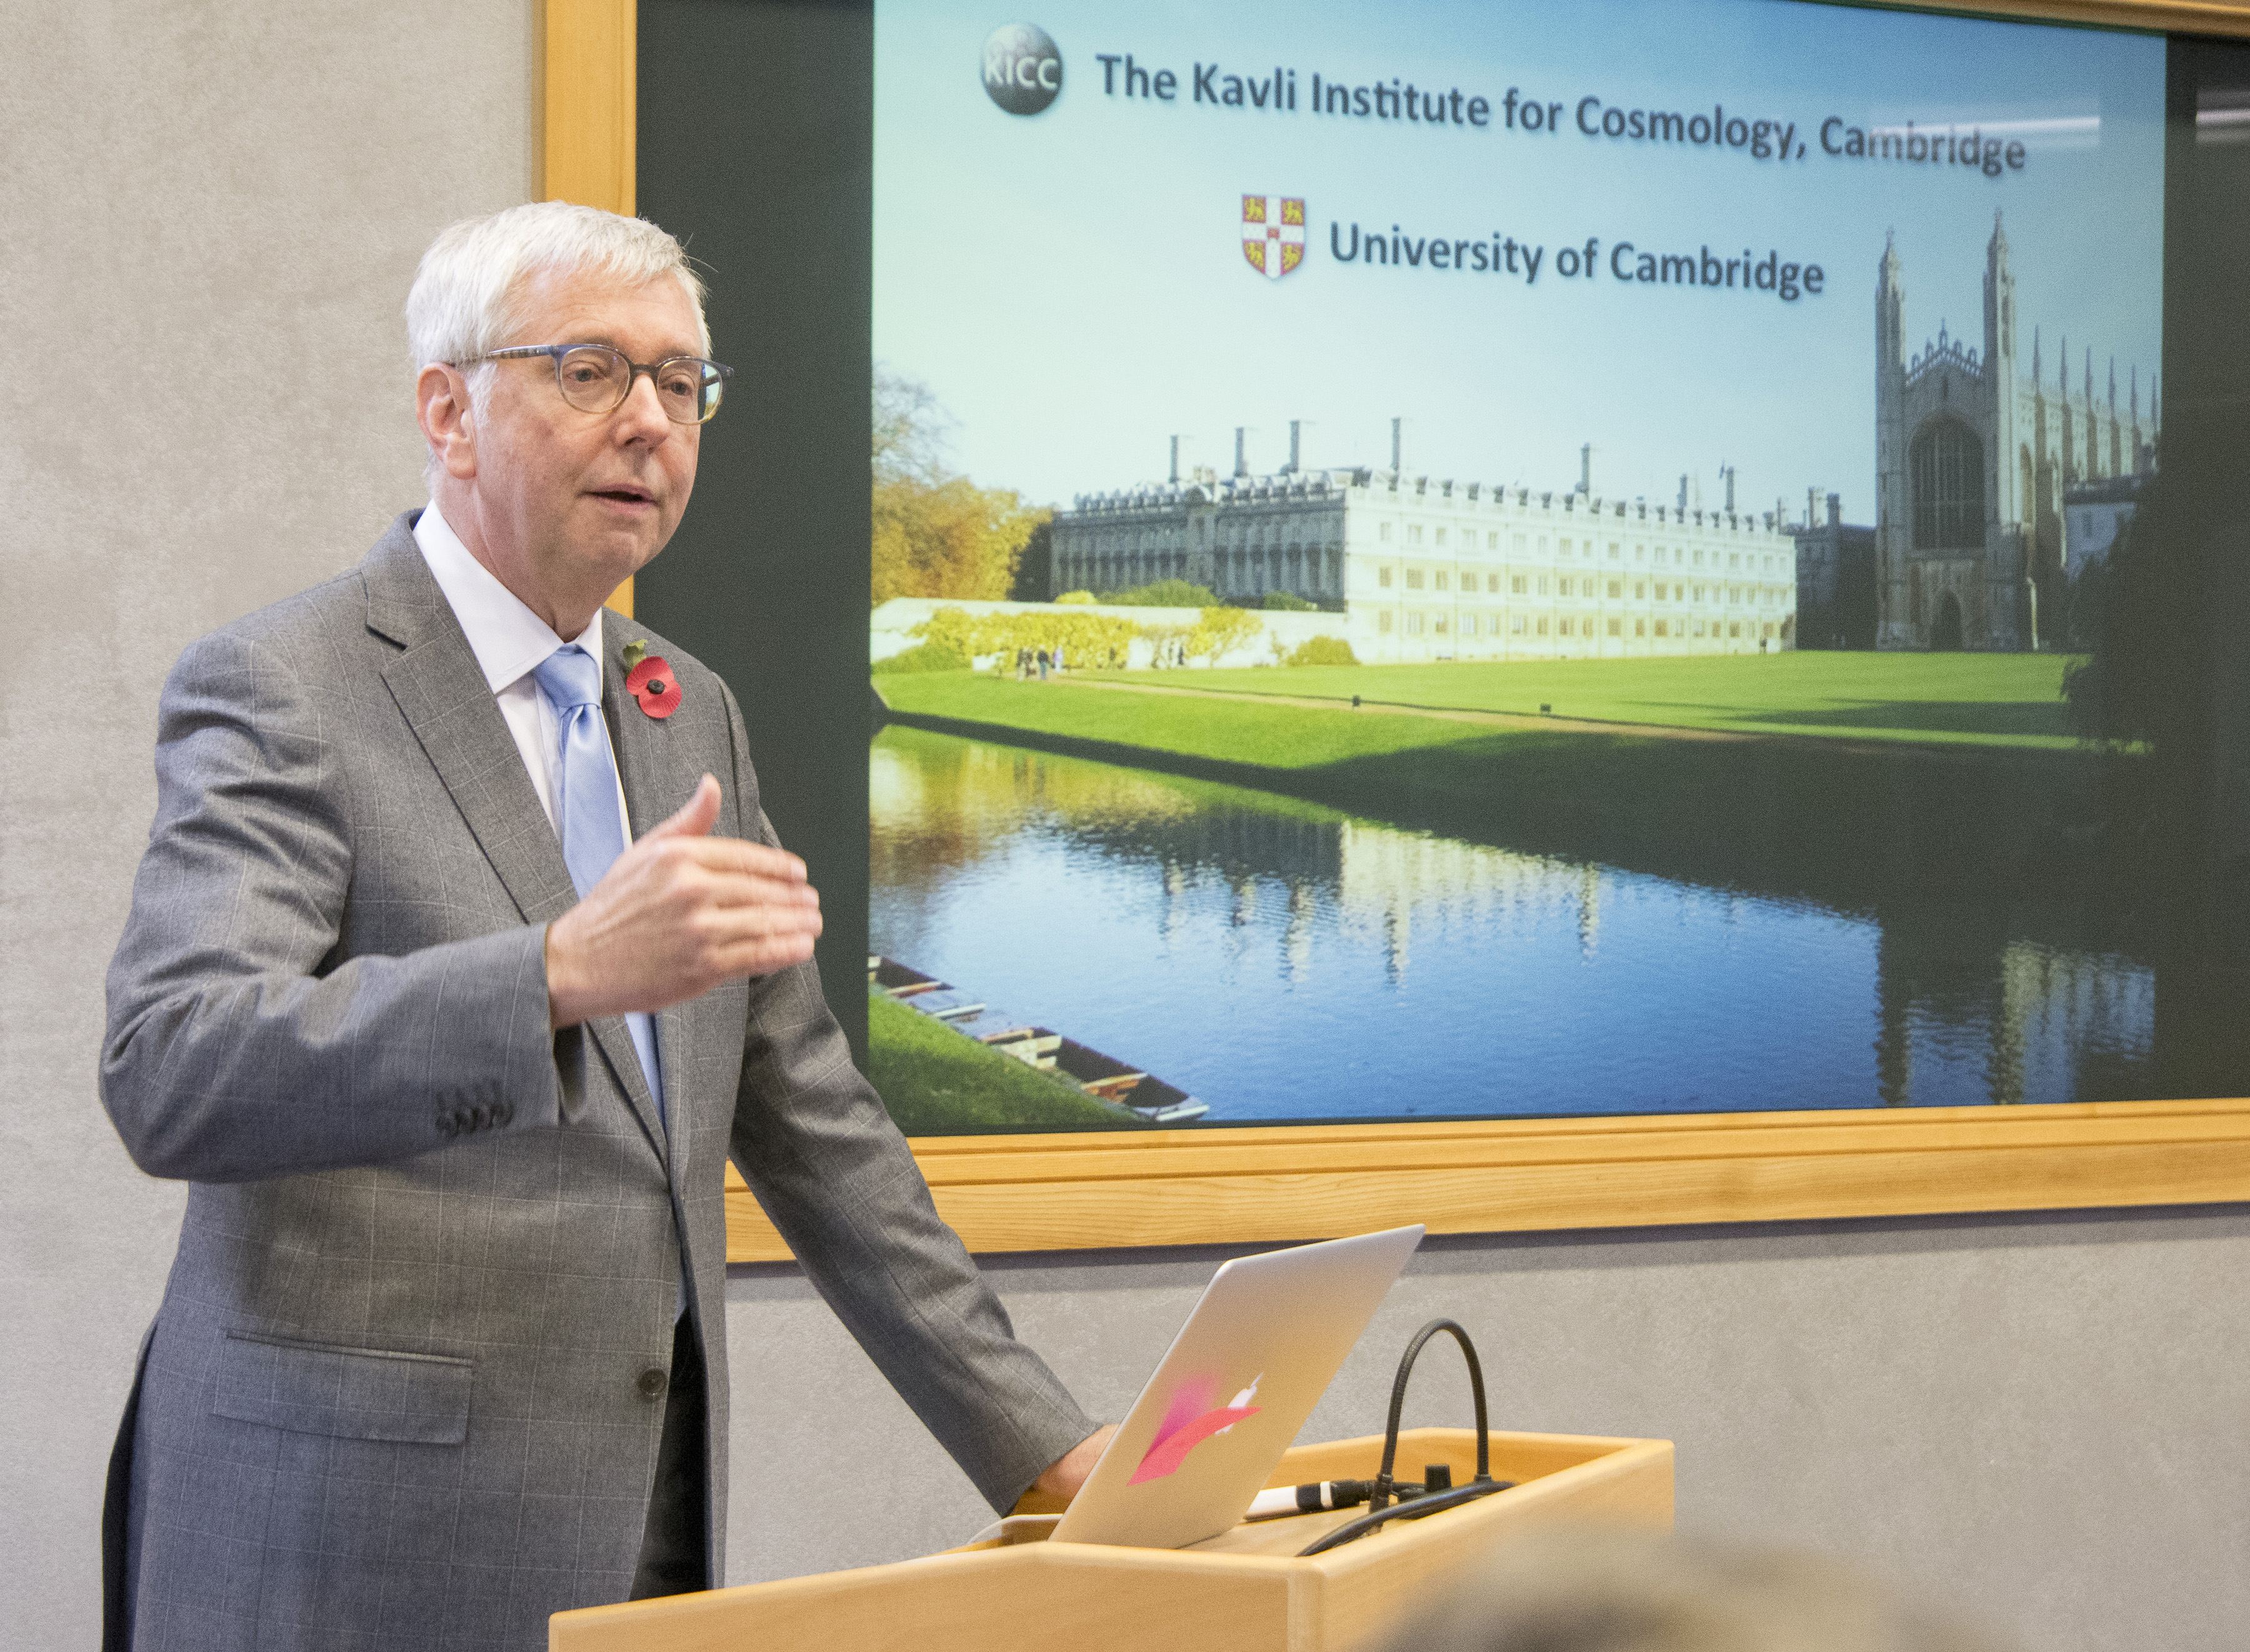 Professor Stephen Toope, Vice Chancellor of the University of Cambridge